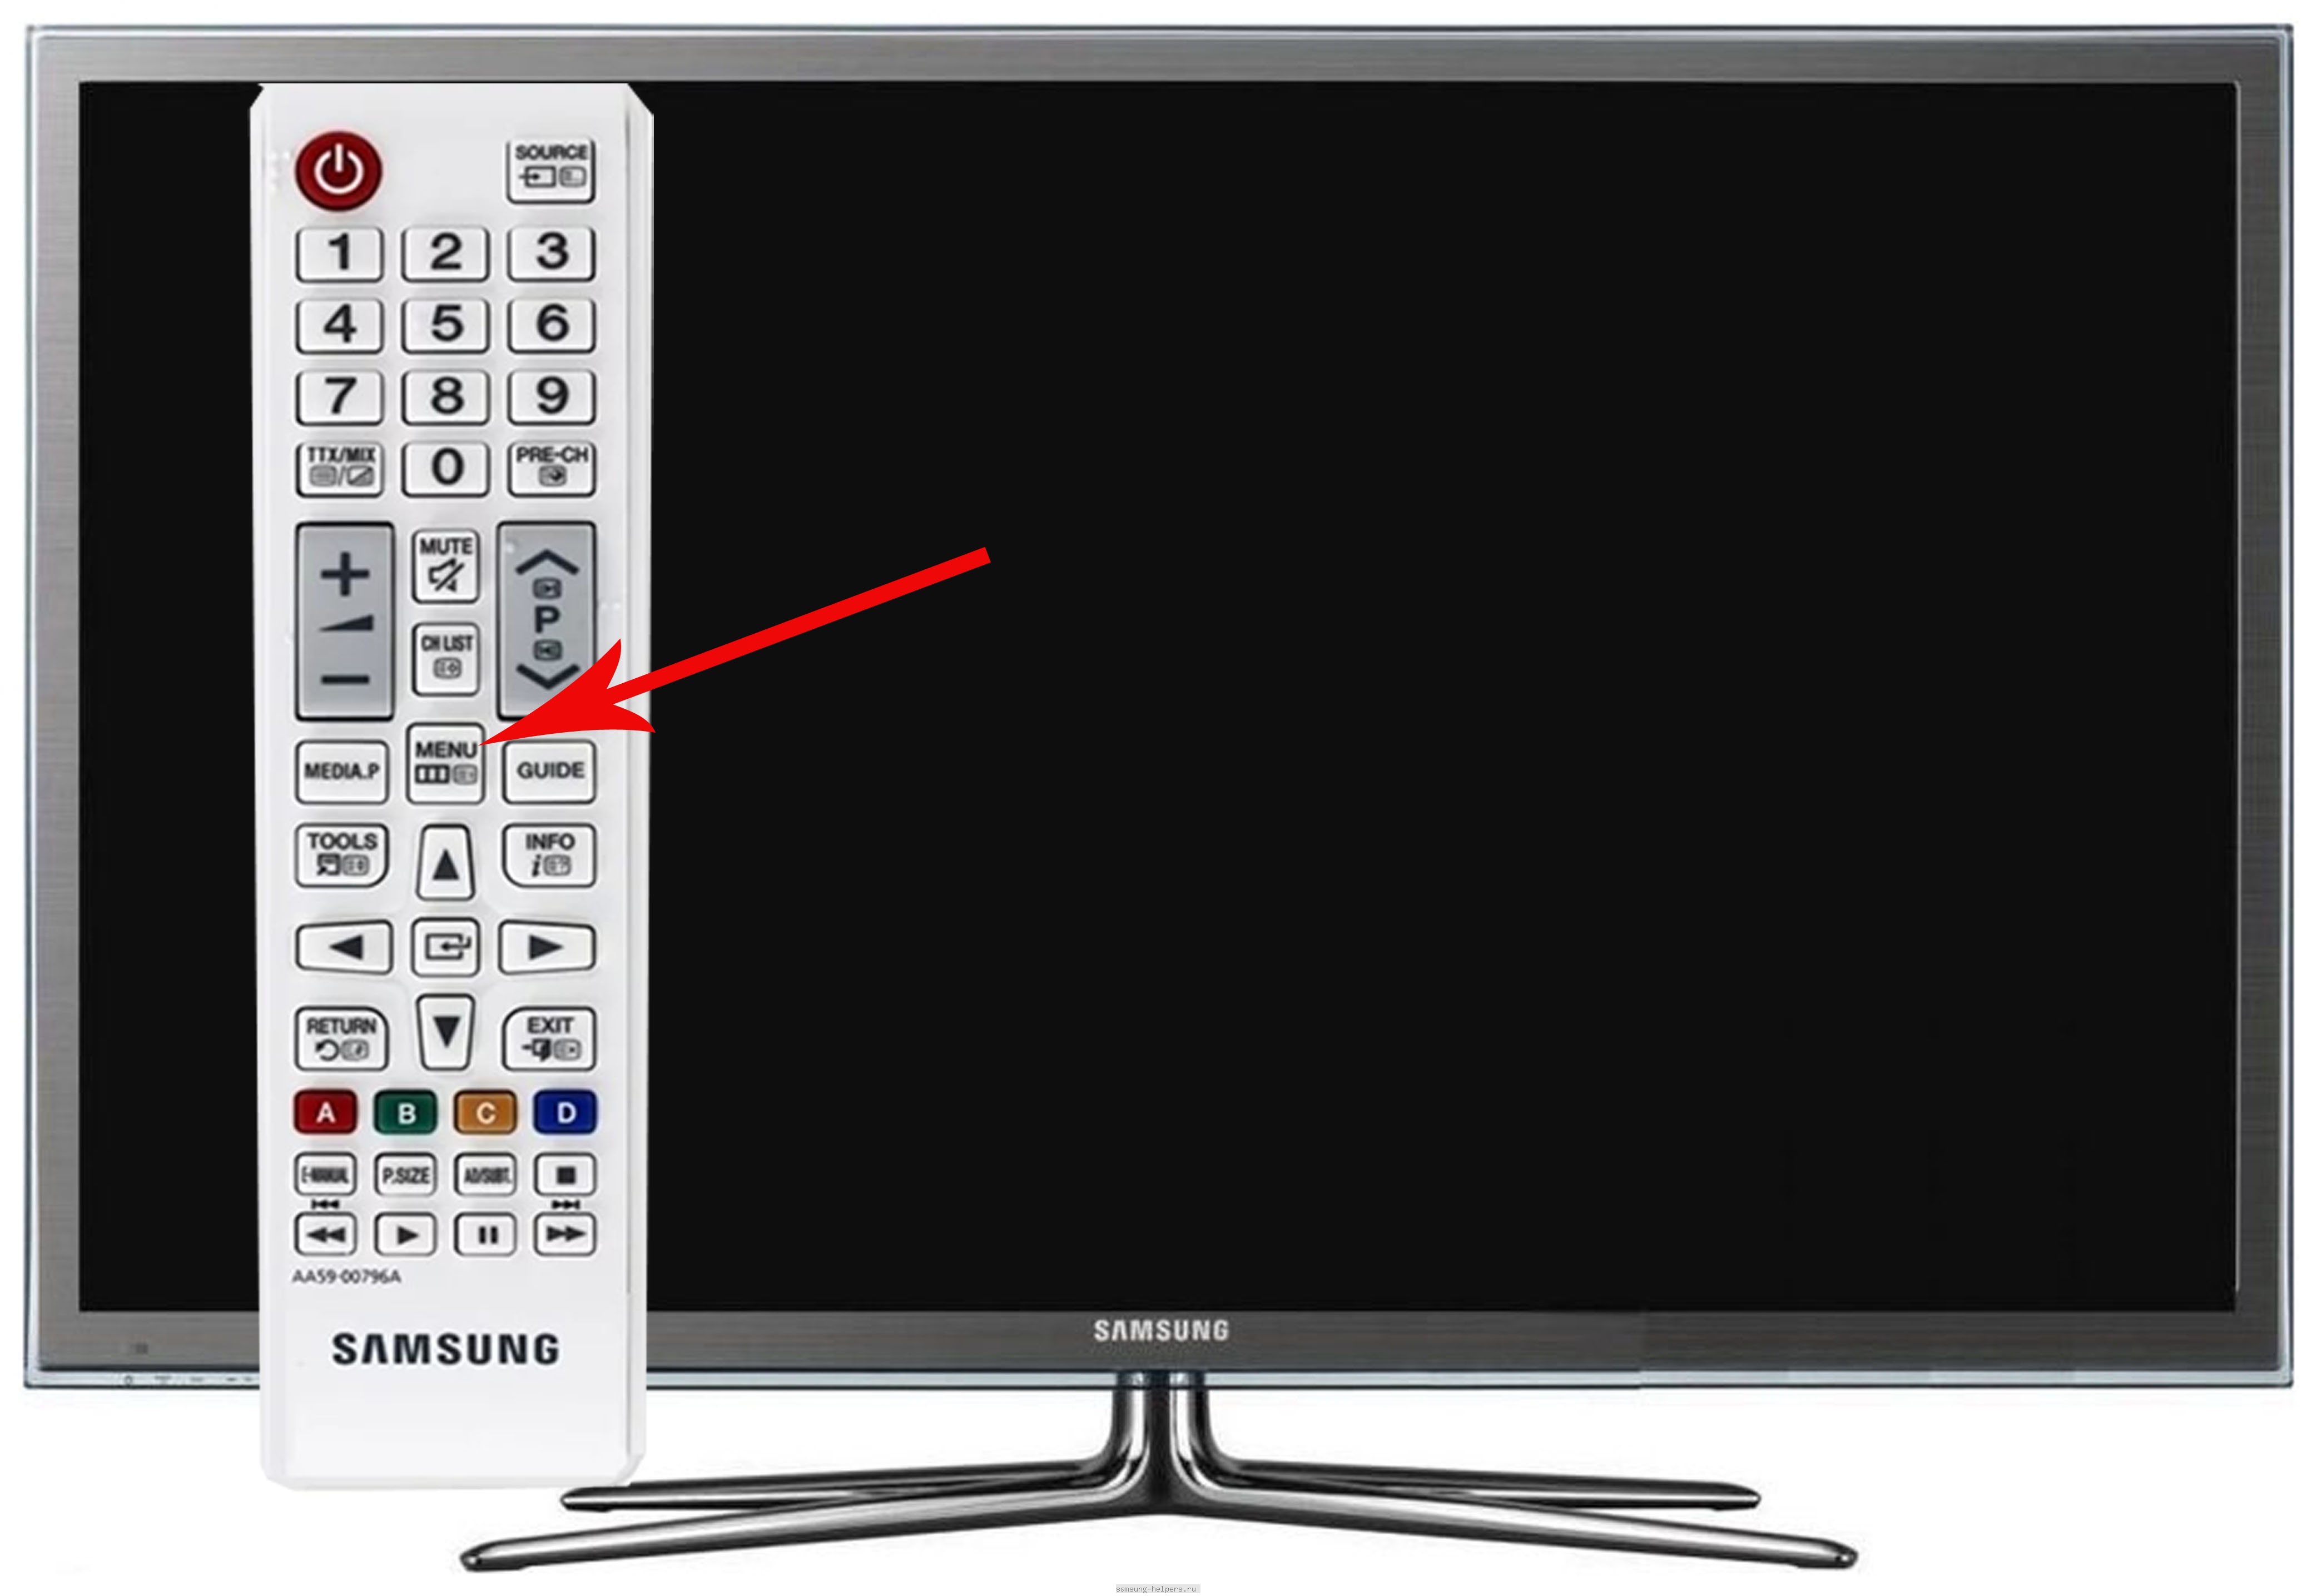 Телевизор лджи нет звука. Телевизор самсунг ключение. Телевизор самсунг 2015 меню. Телевизор самсунг черный экран. Включение экрана телевизора.